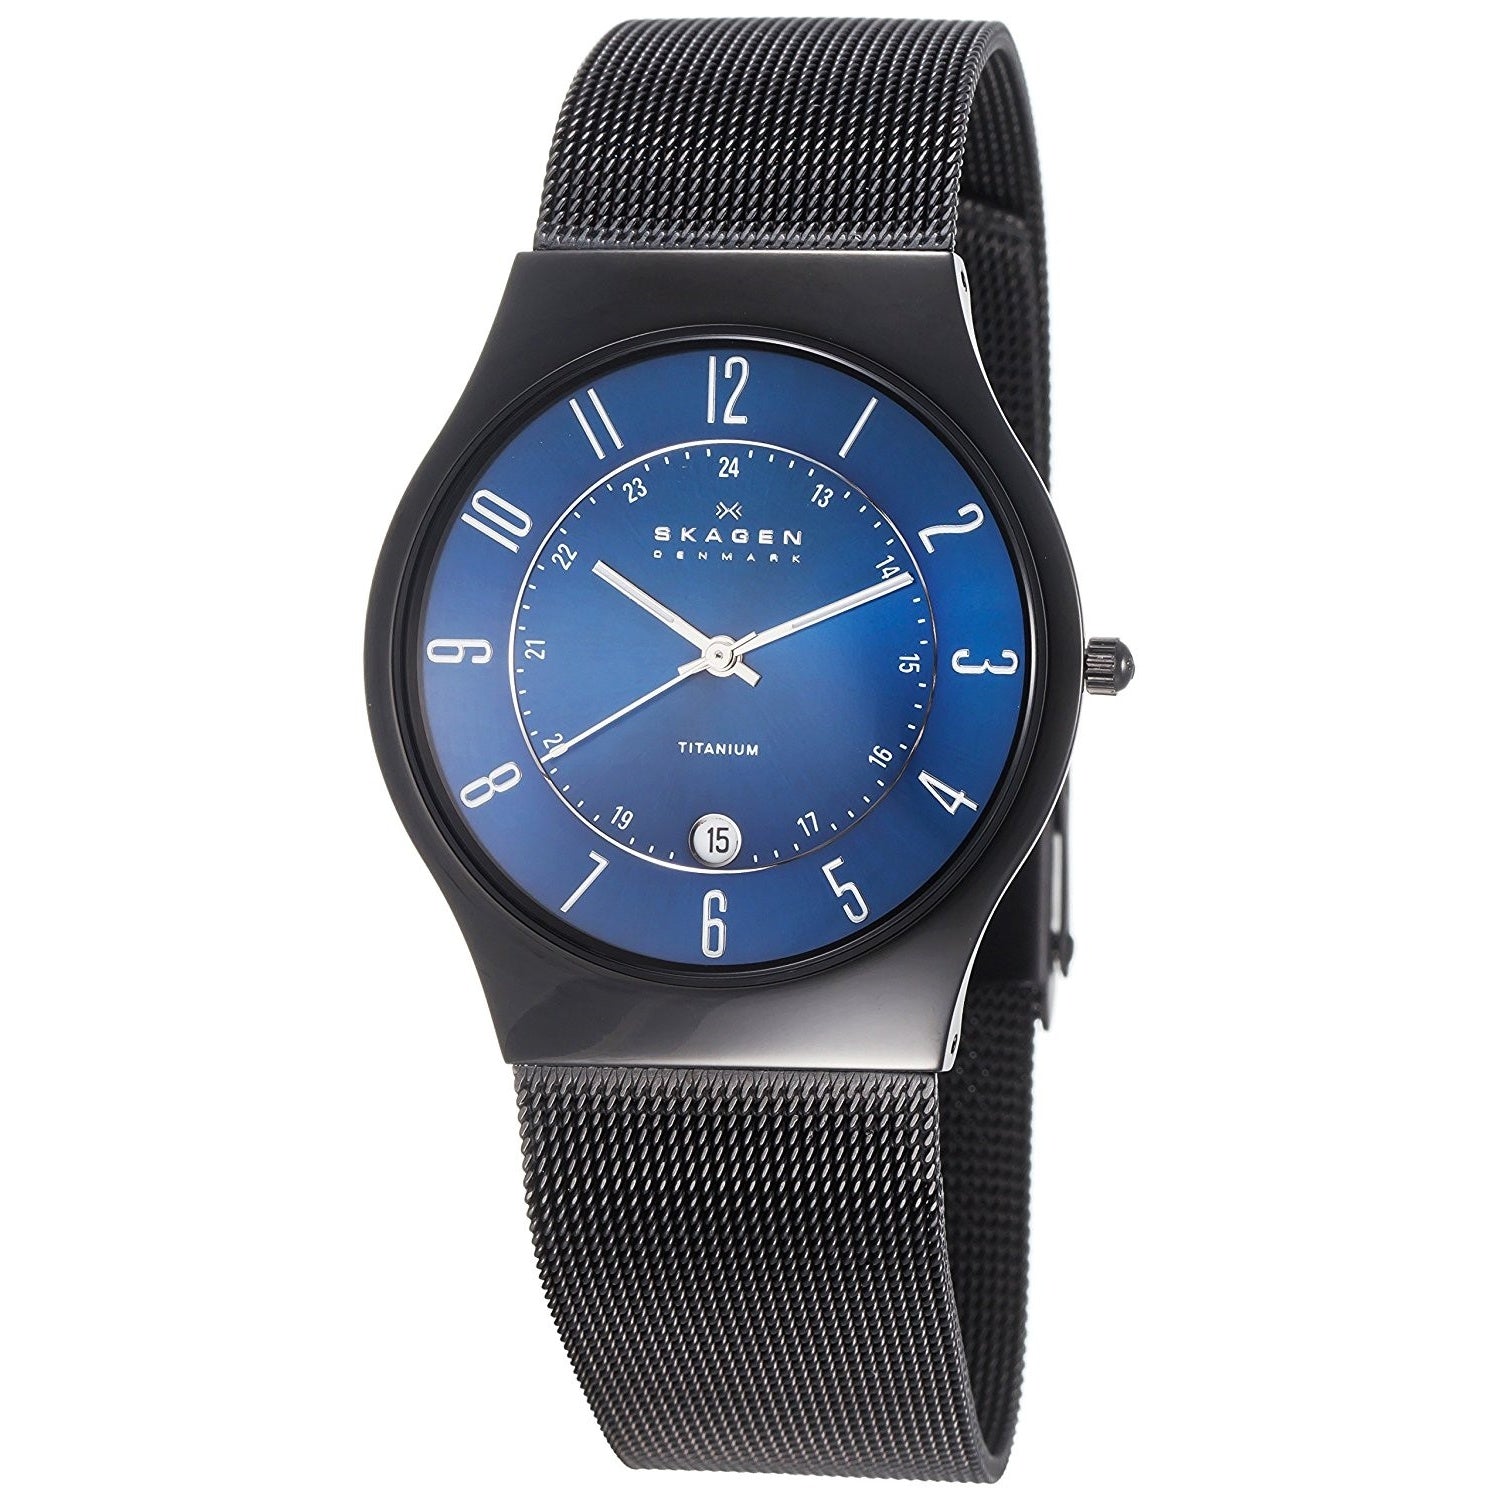 Skagen Men's T233XLTMN 'Signature' Black Titanium Watch 768680066067 | eBay